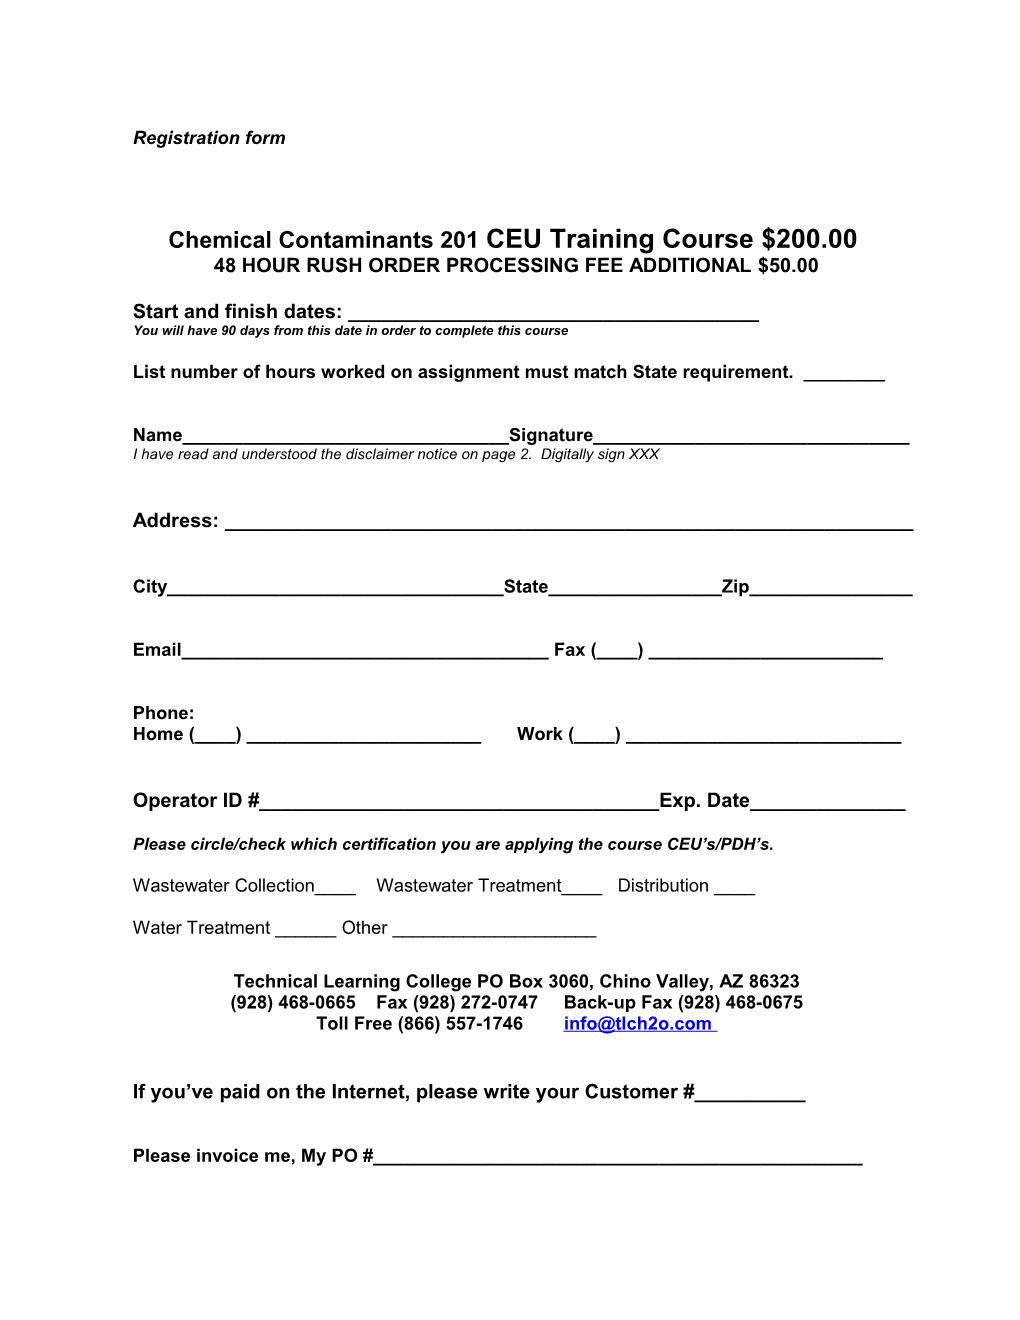 Chemical Contaminants 201CEU Training Course $200.00